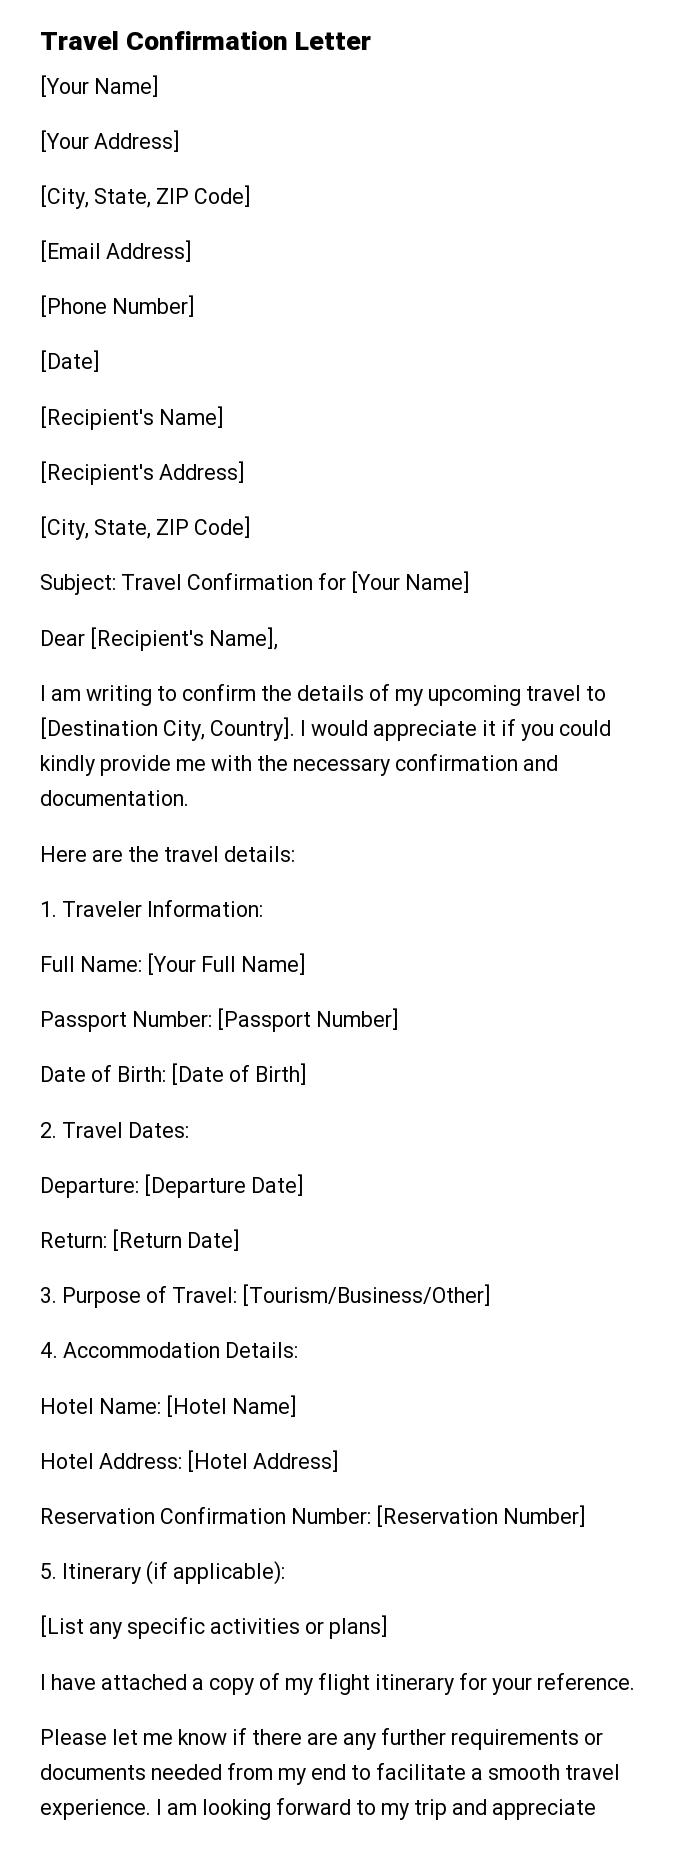 Travel Confirmation Letter